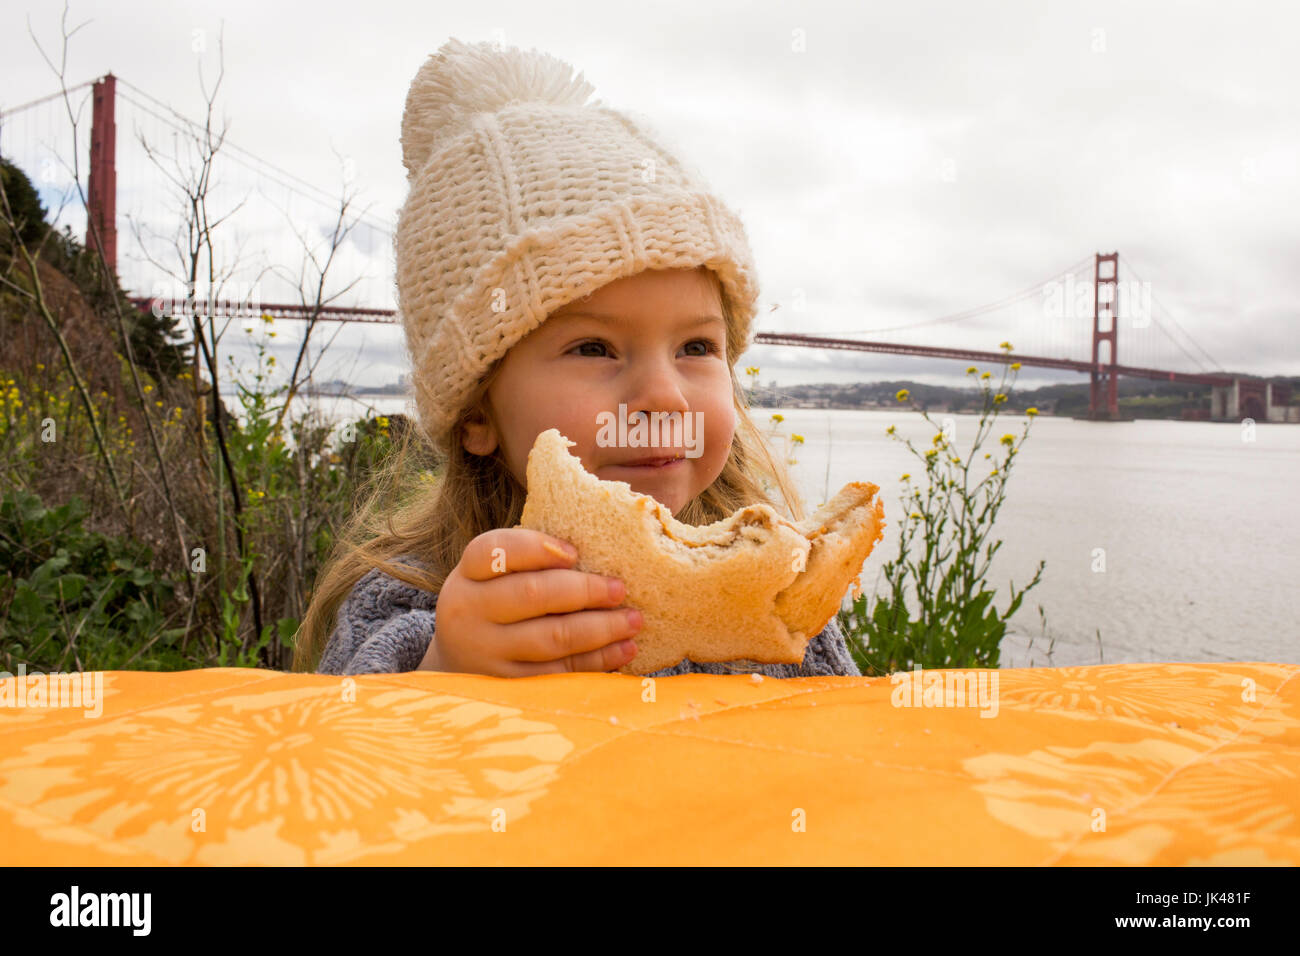 Caucasian girl eating sandwich outdoors Stock Photo